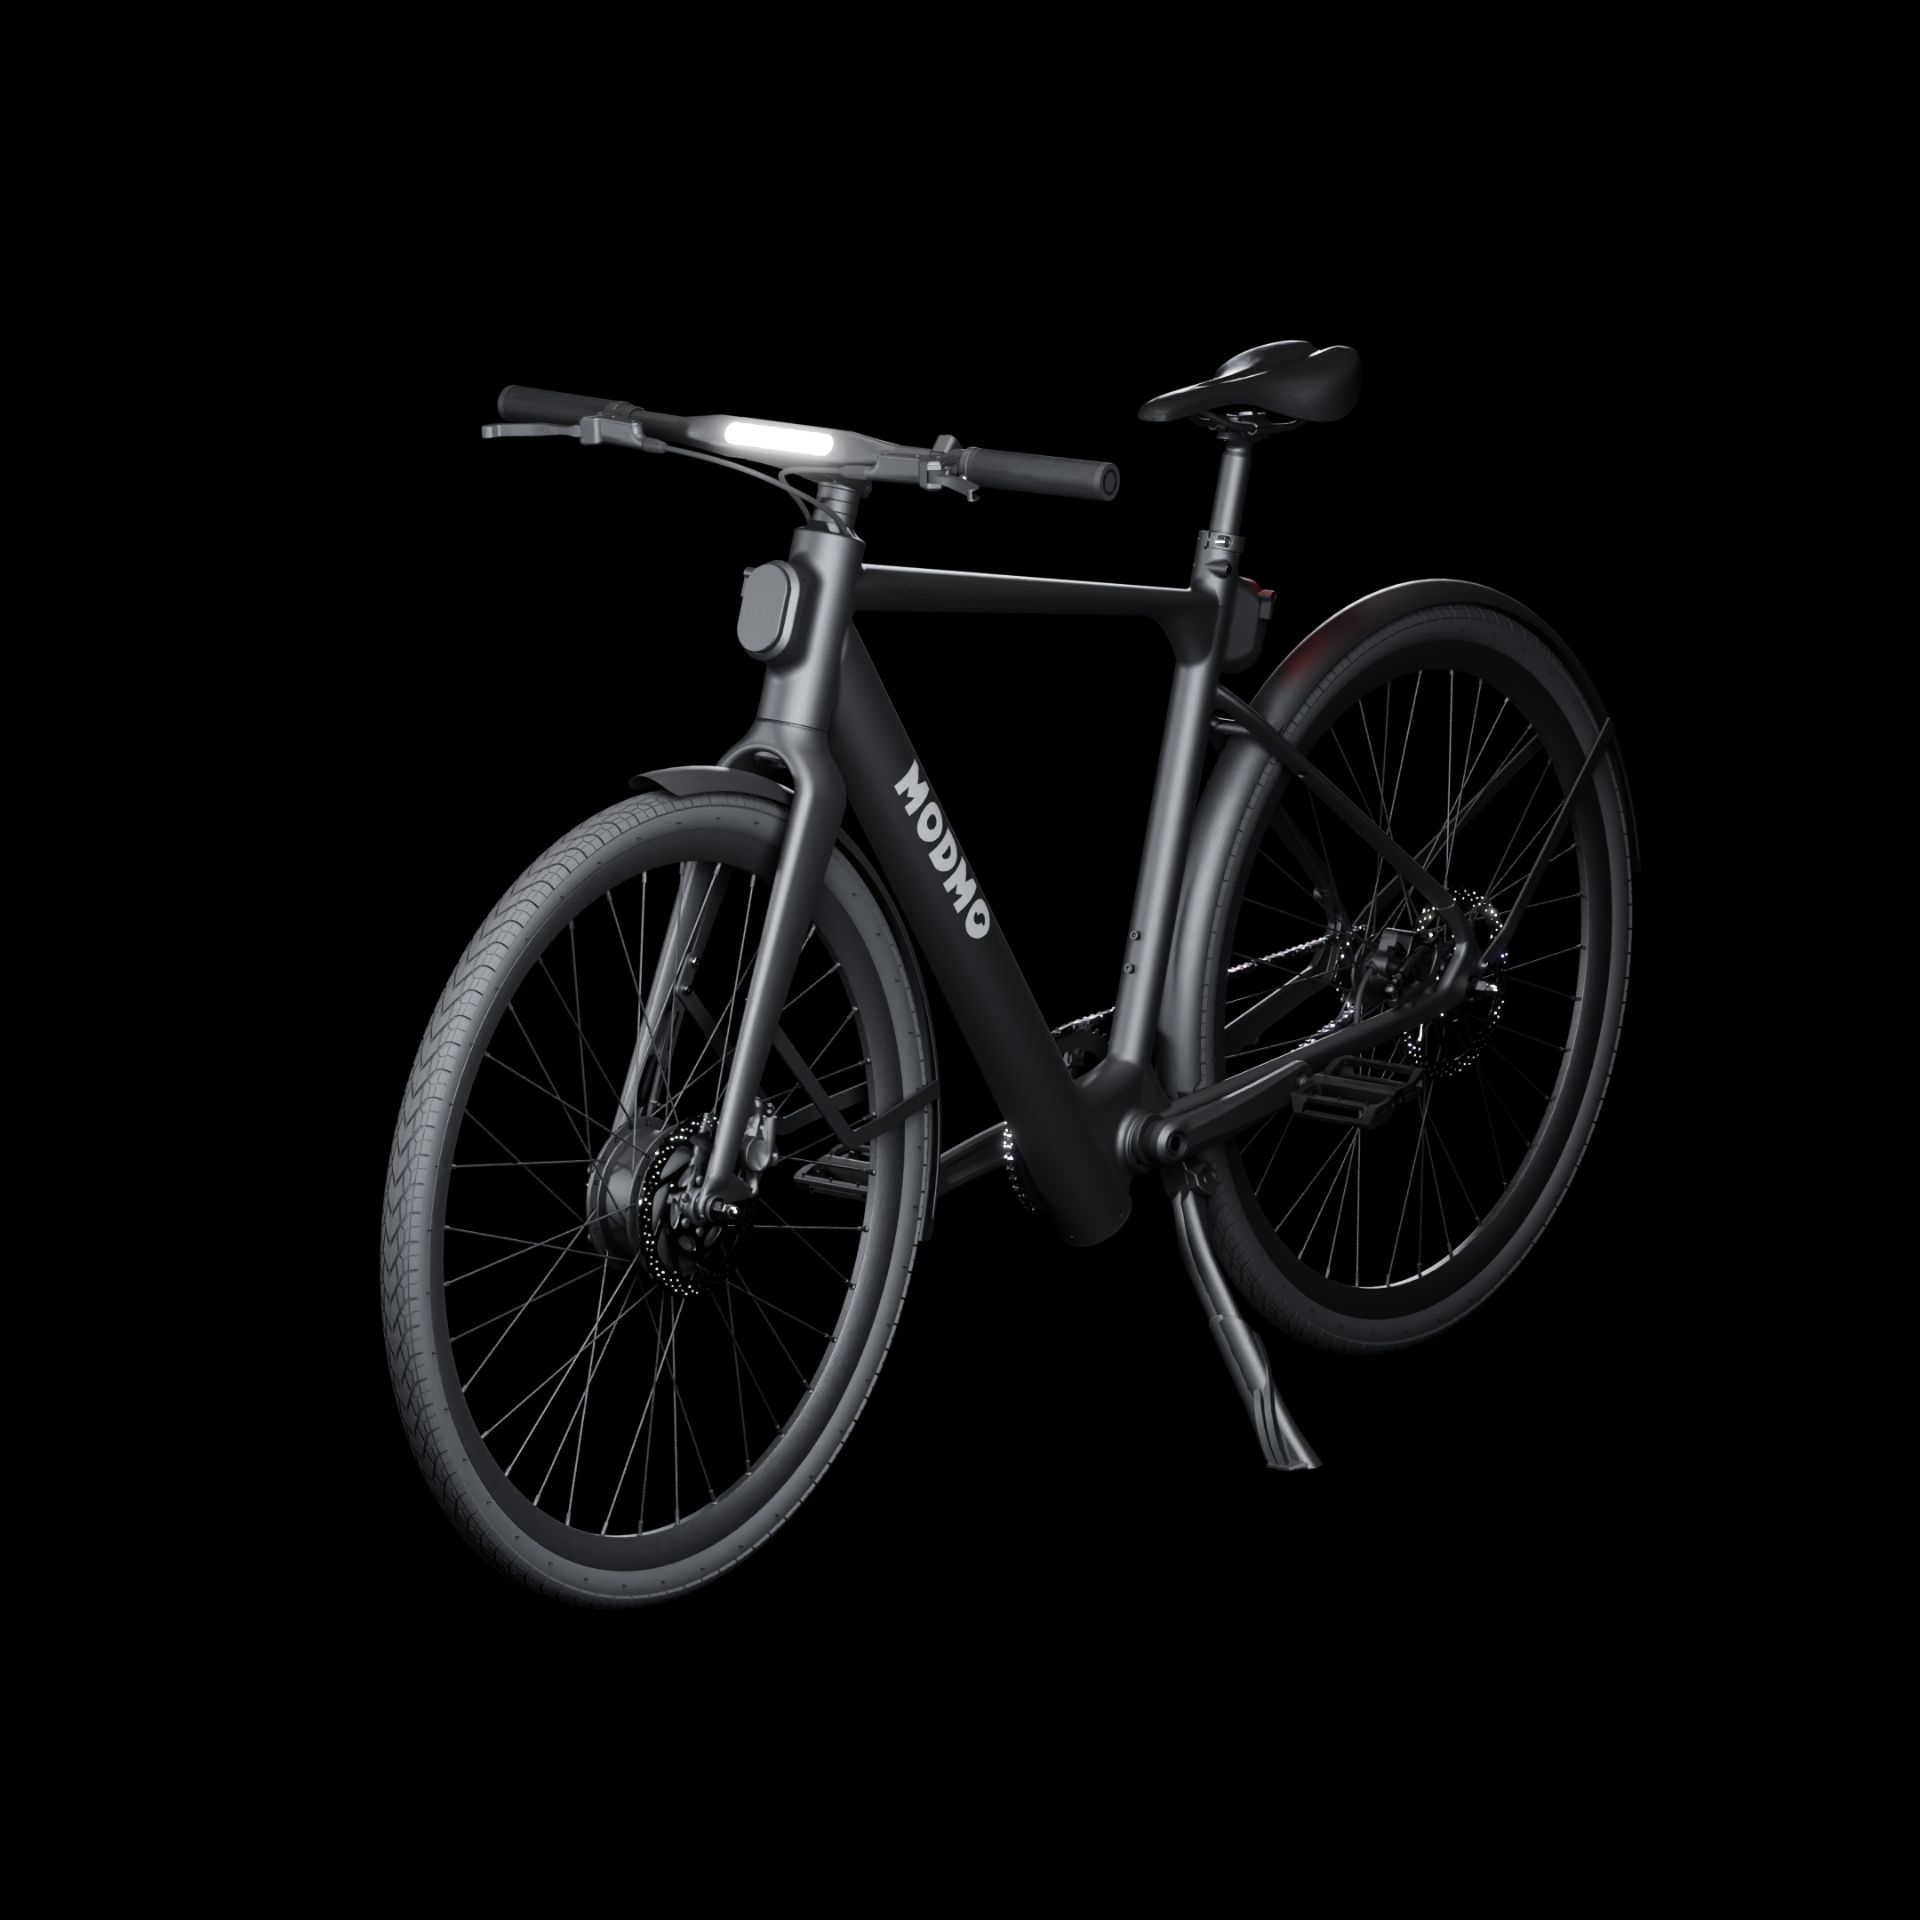 Modmo Saigon+ Electric Bicycle - RRP £2800 - Size L (Rider 175-190cm) - Image 2 of 17